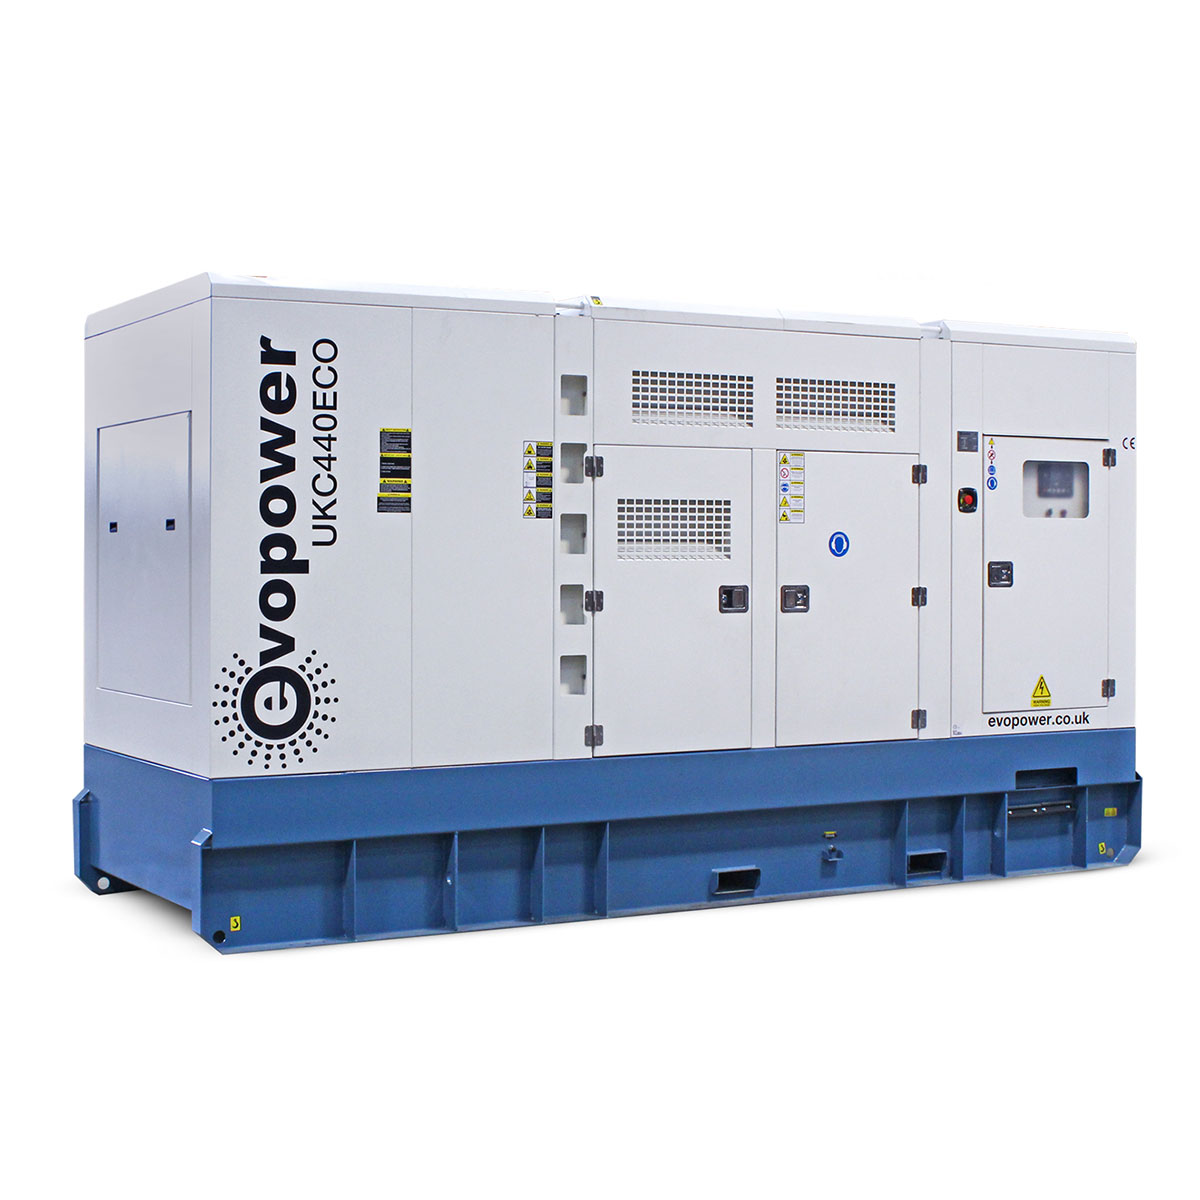 Evopower UKC440ECO 3-phase Diesel Generator